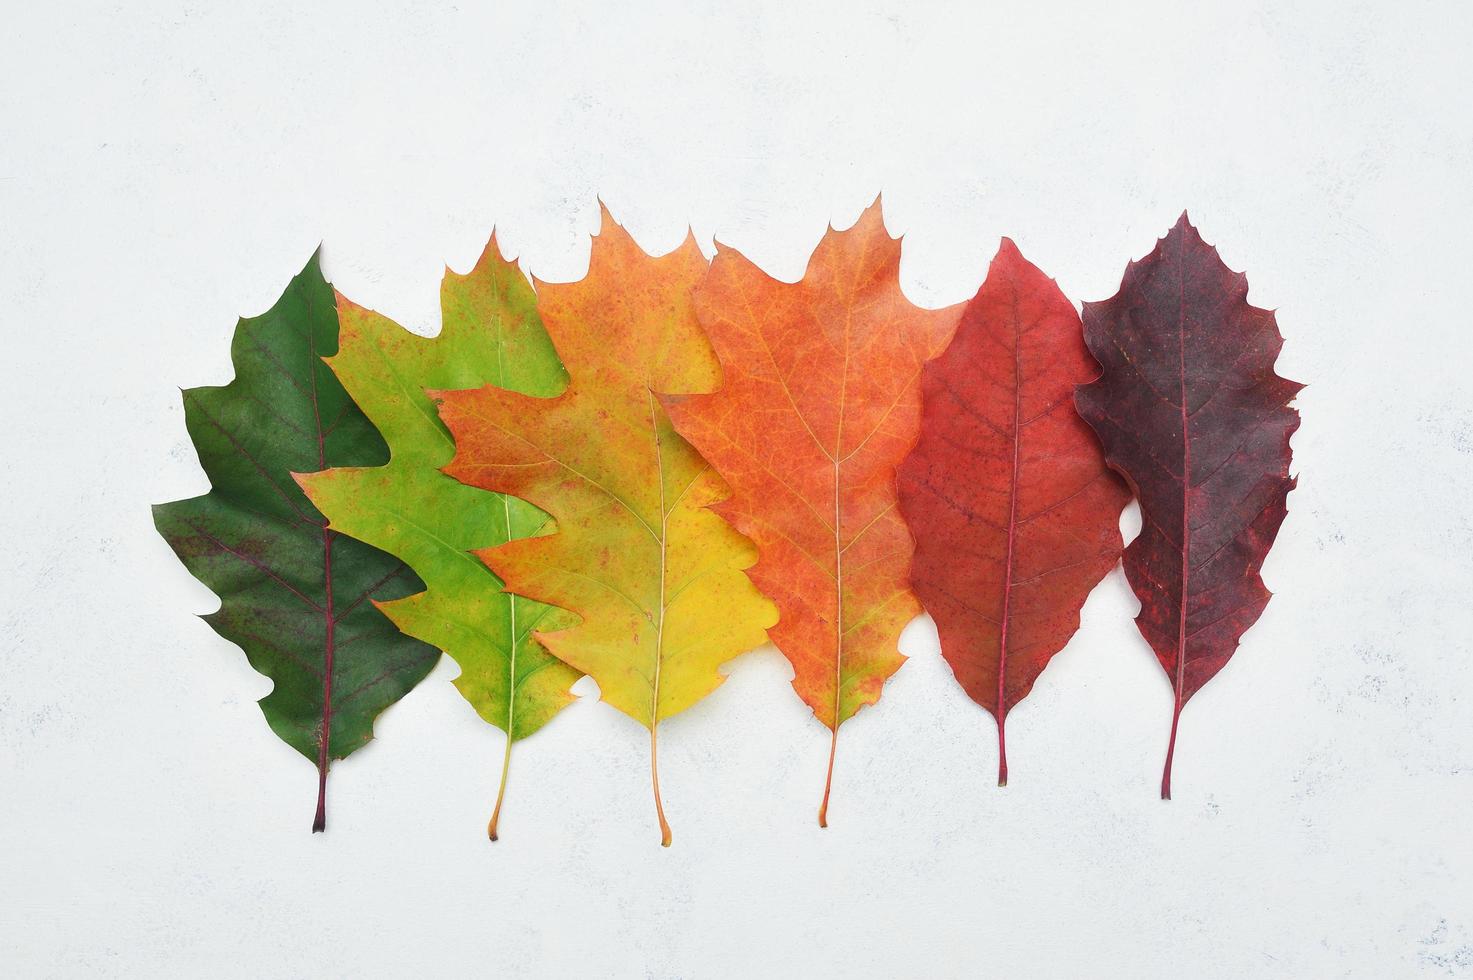 folhas gradientes de outono isoladas foto